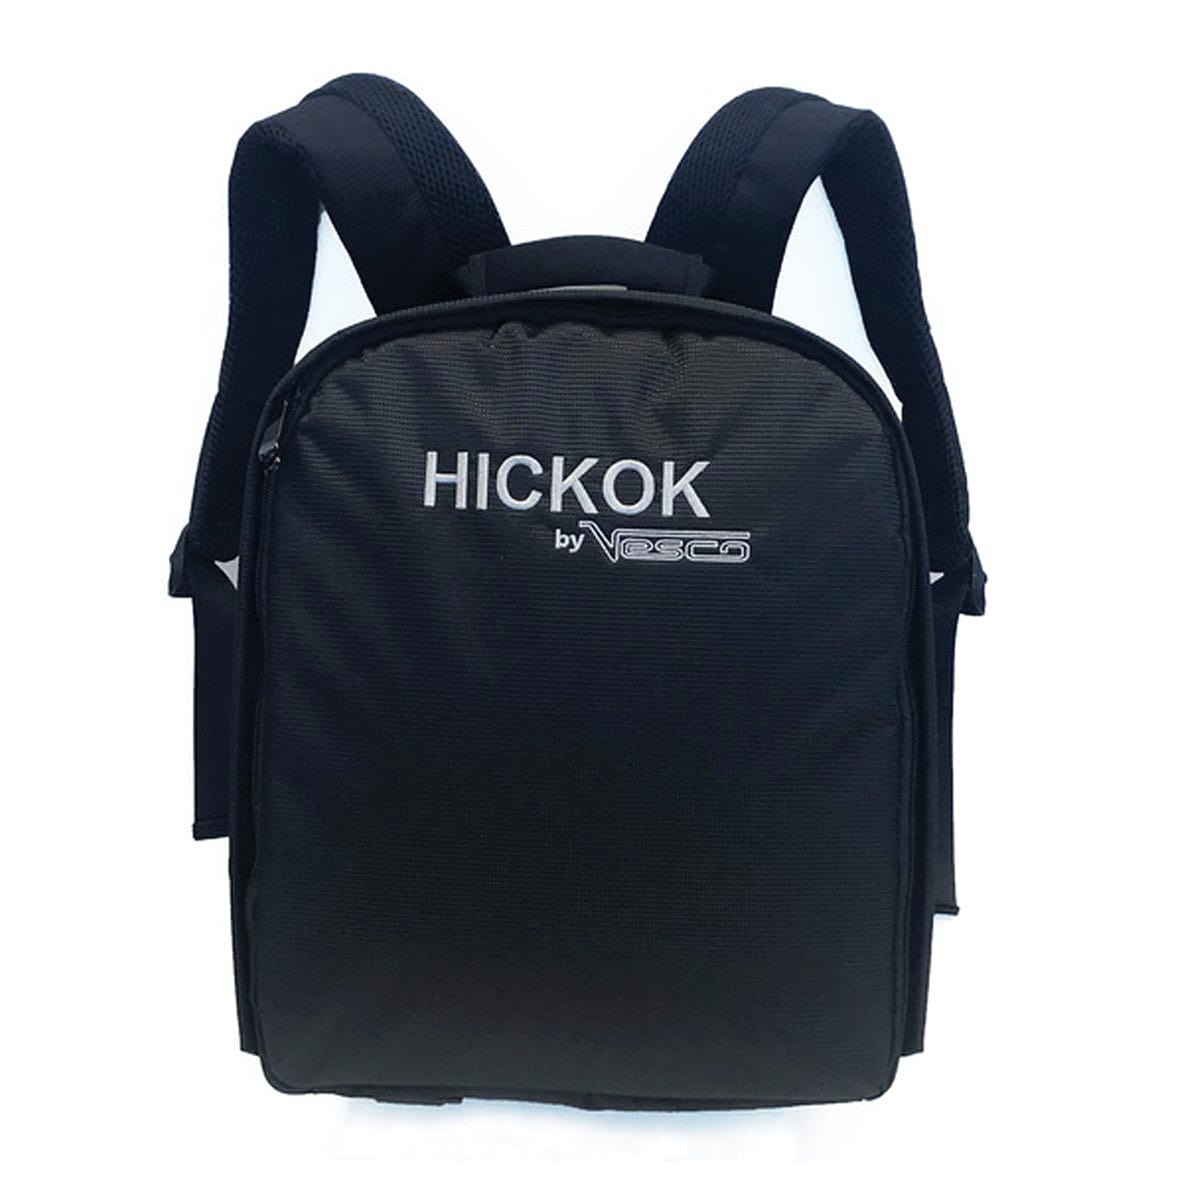 Hickok Professional X40 Electric Pruner